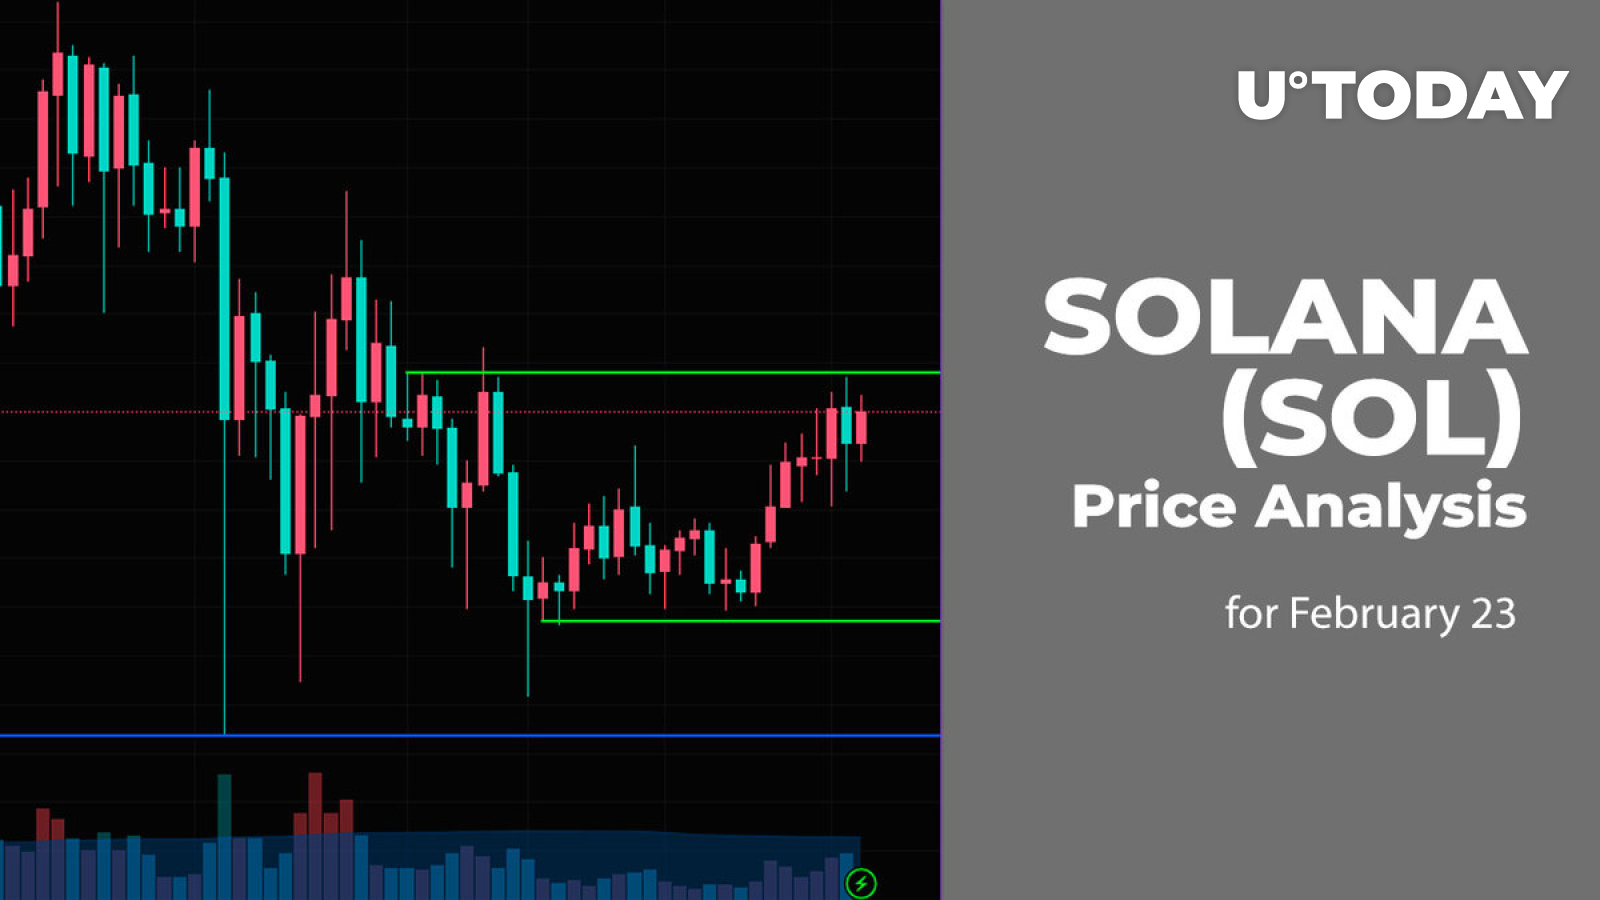 Solana (SOL) Price Prediction for February 23